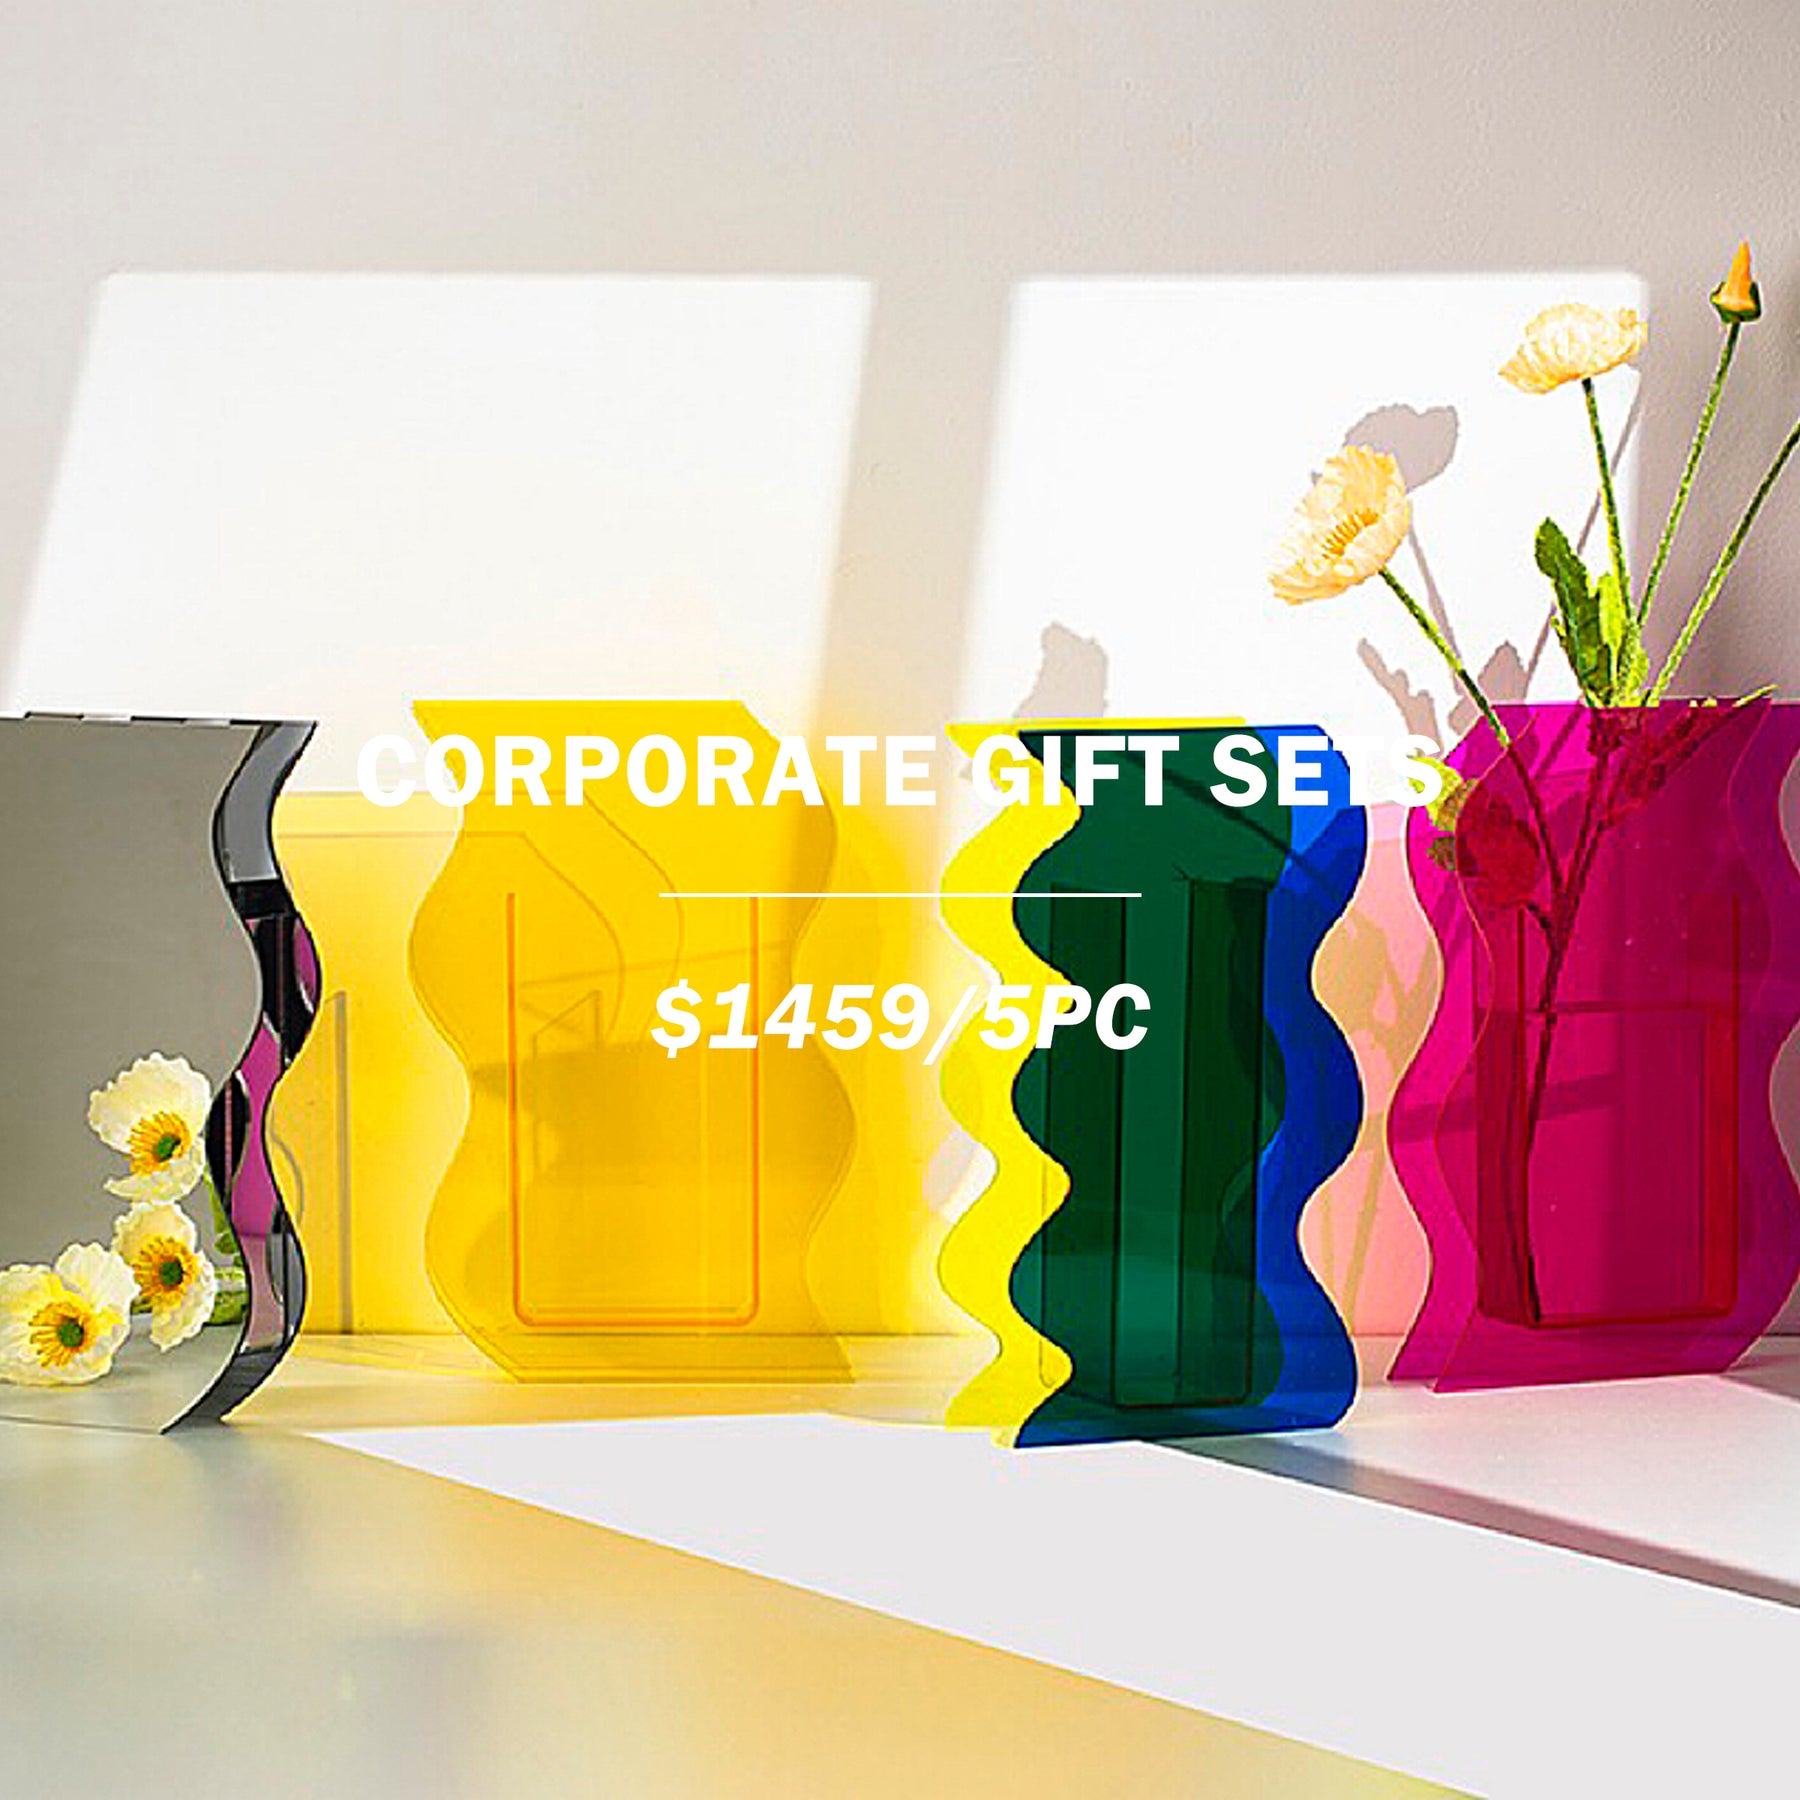 【Corporate Gifts】 Acrylic Vase & Illustration  Ornament customization Acrylic Vase & Illustration  Ornament printing logo x 5 pcs |亞克力花瓶5件套訂製 插畫擺件訂製